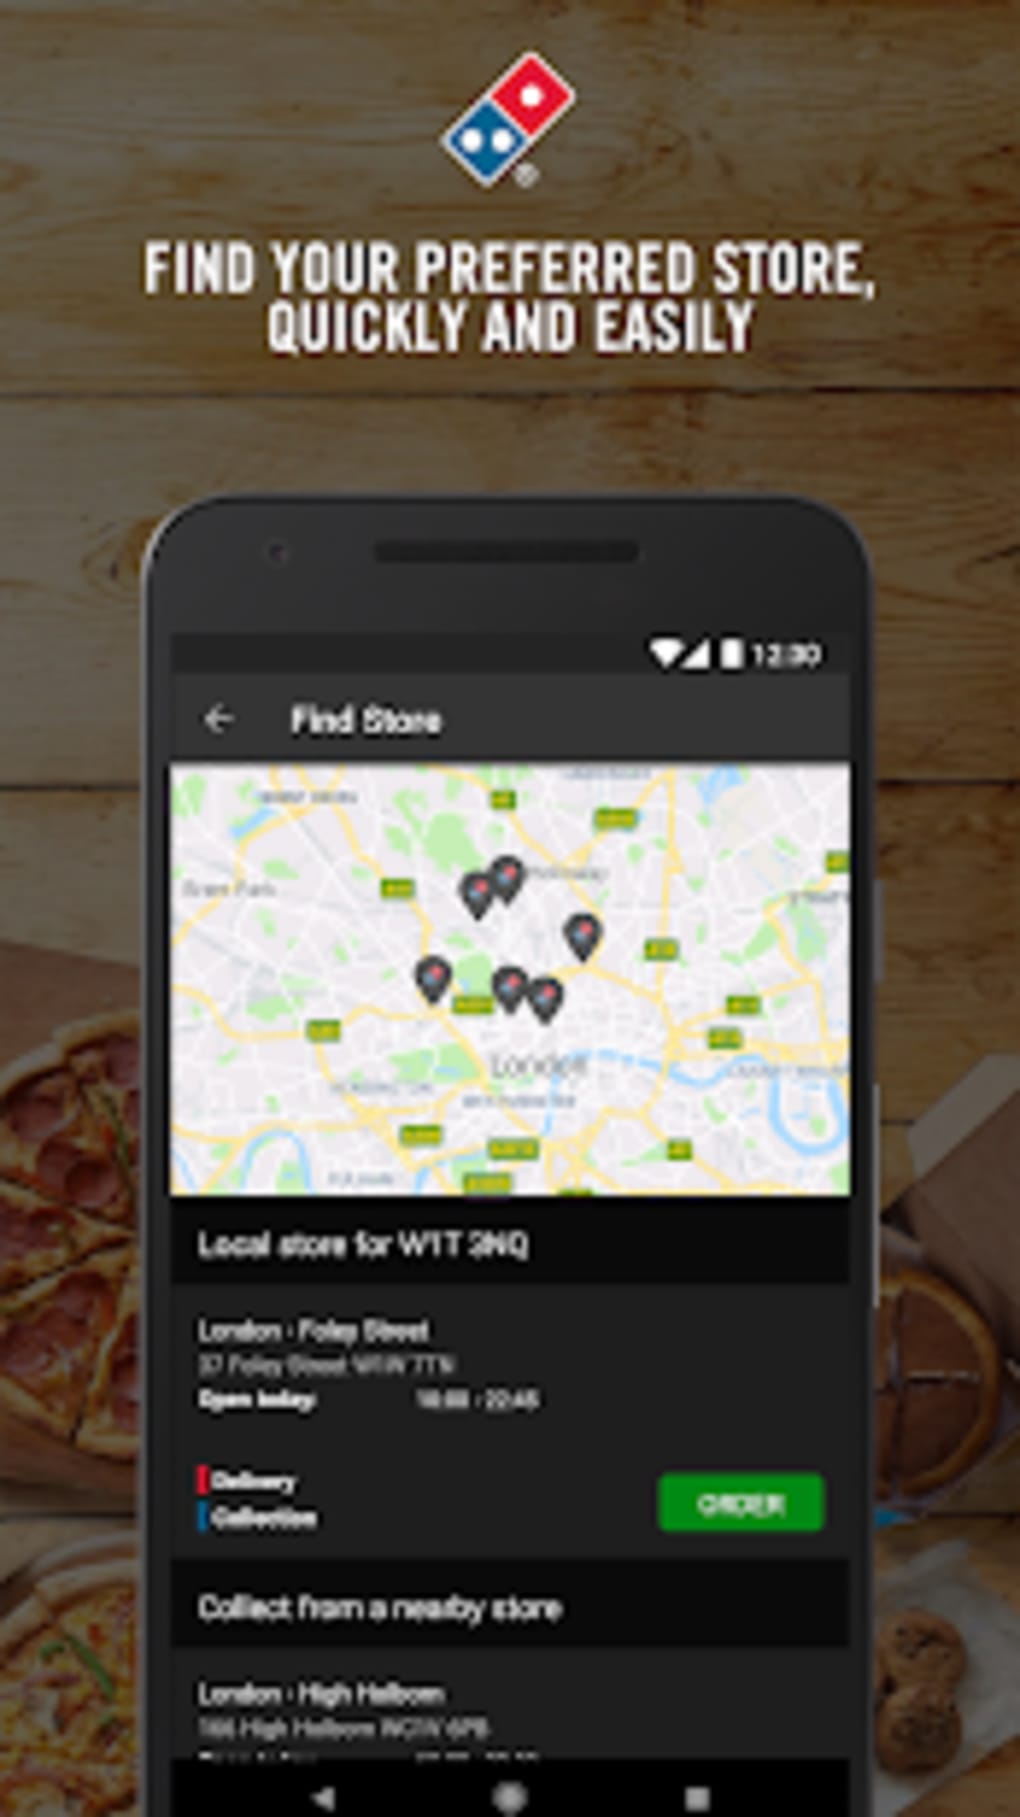 Pizano pizza delivery app APK pour Android Télécharger